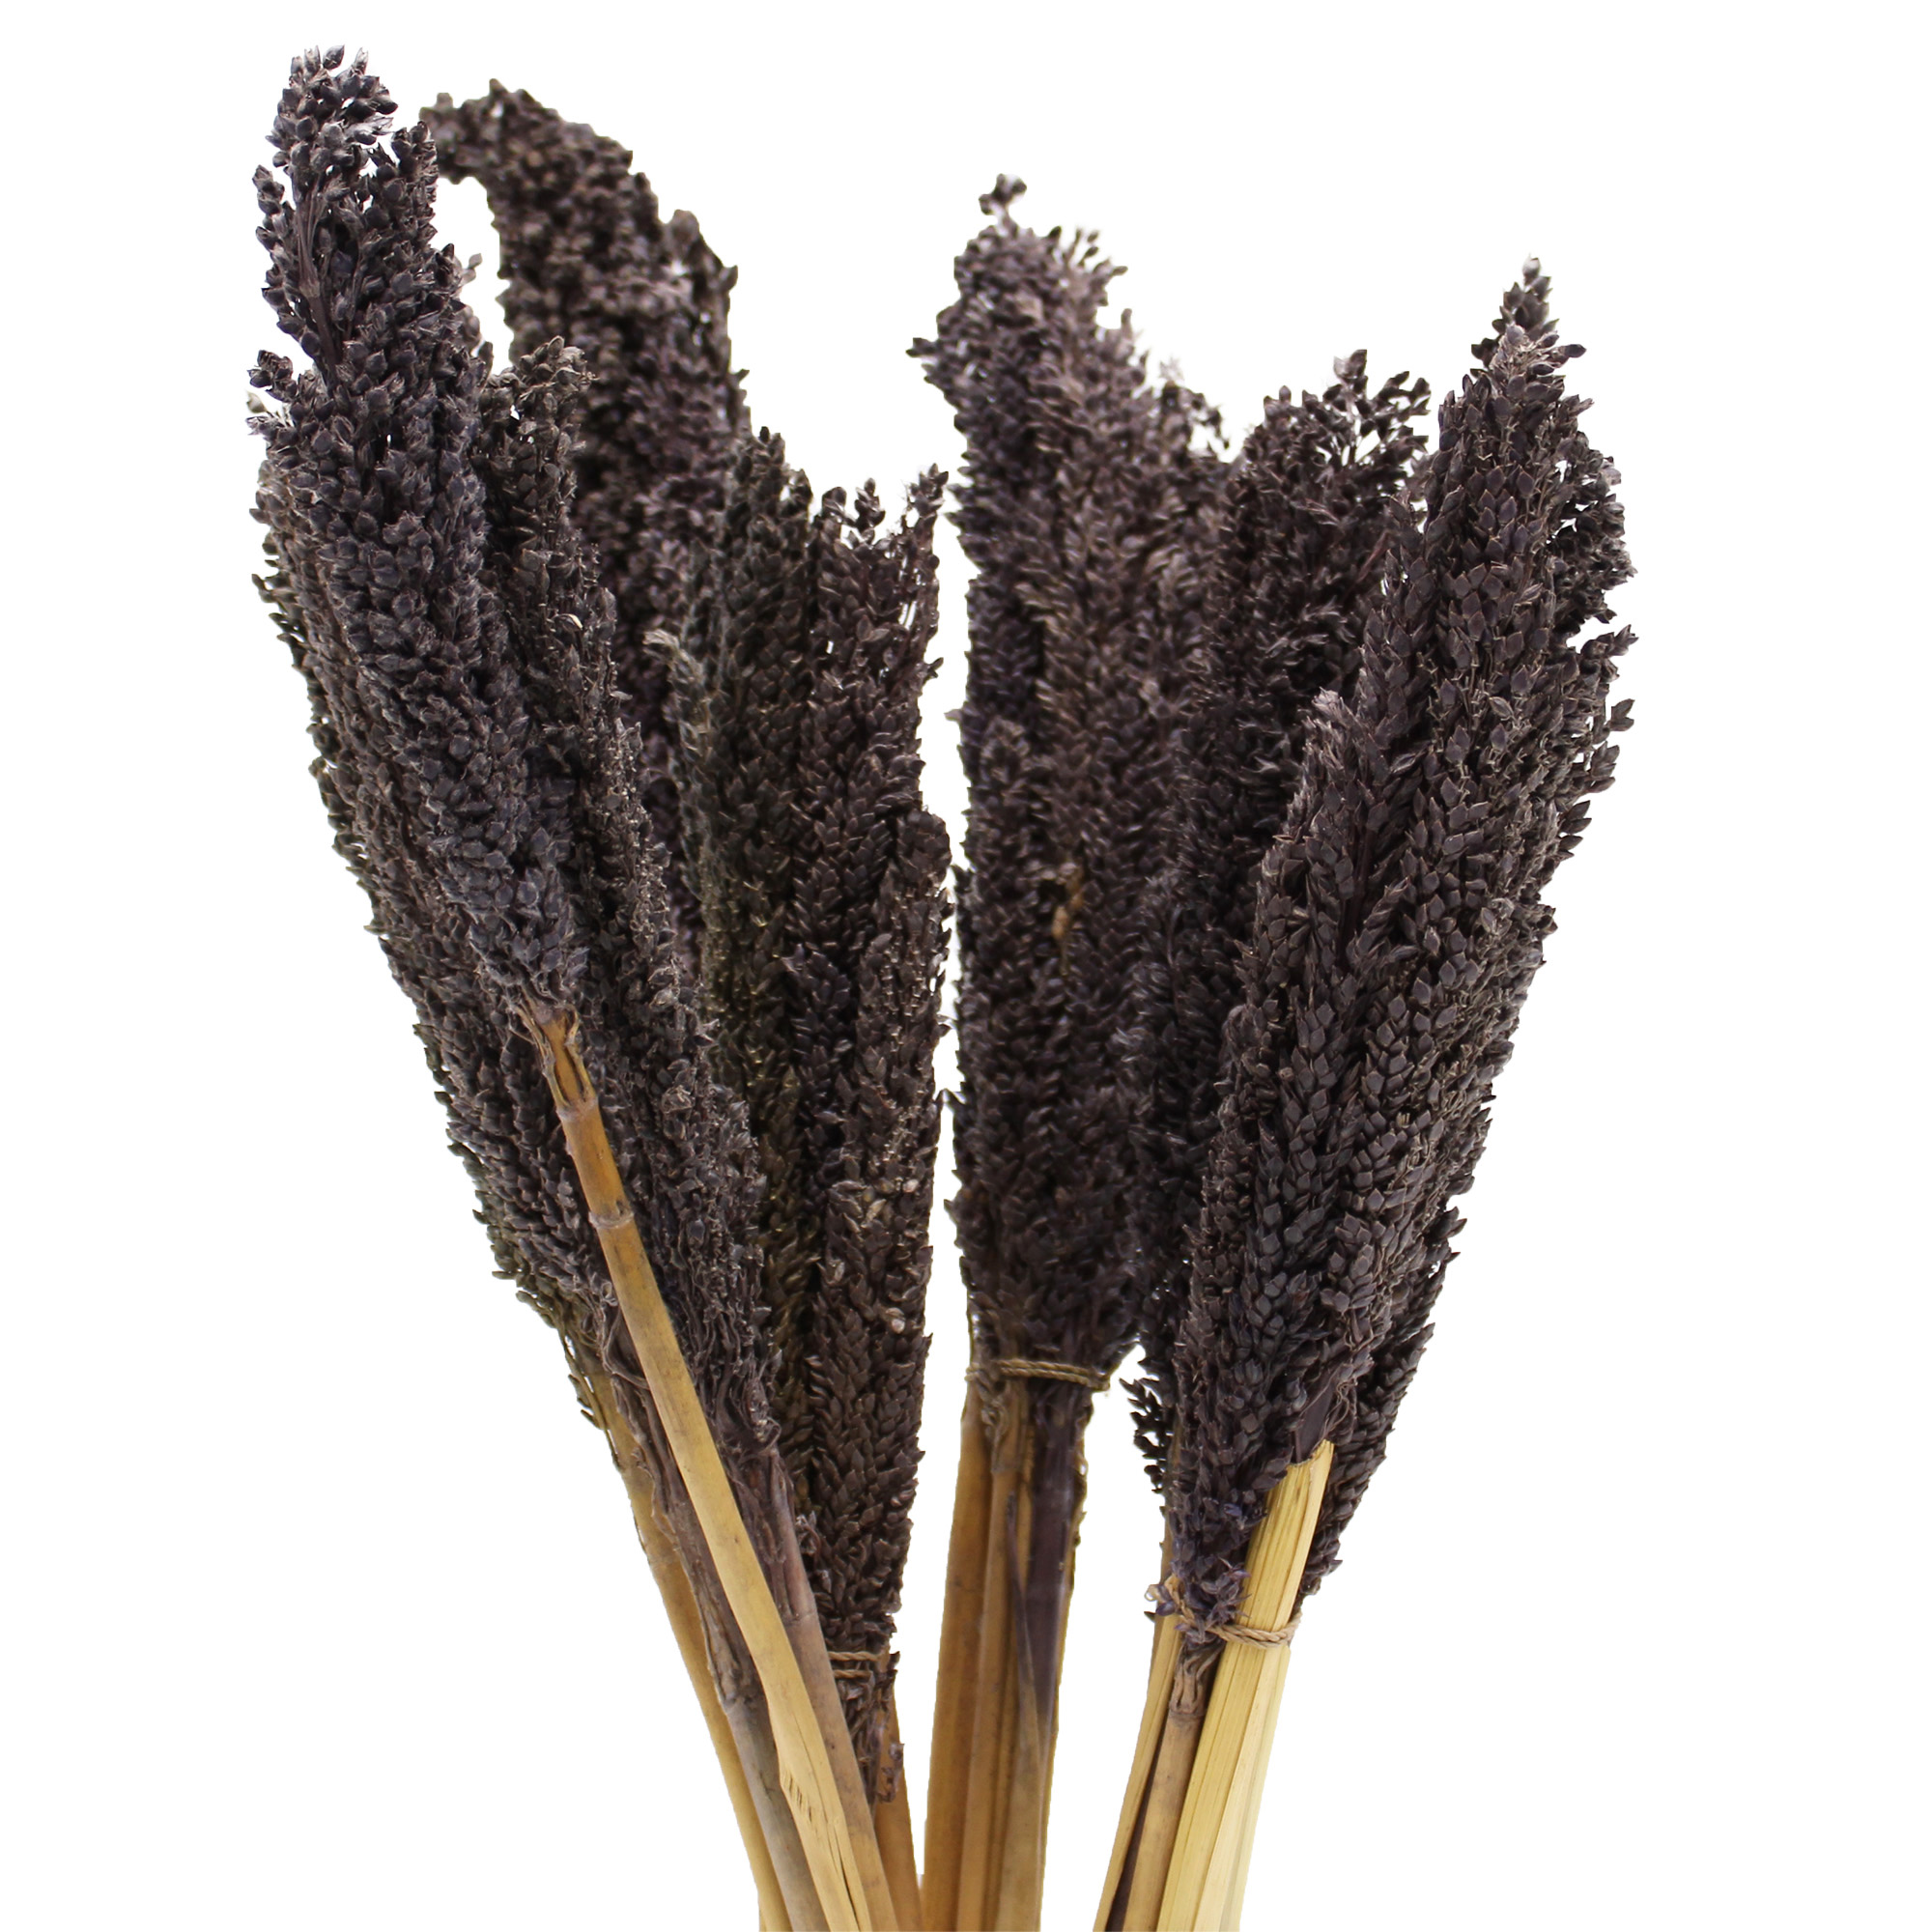 Cantal Grass Bunch - Black